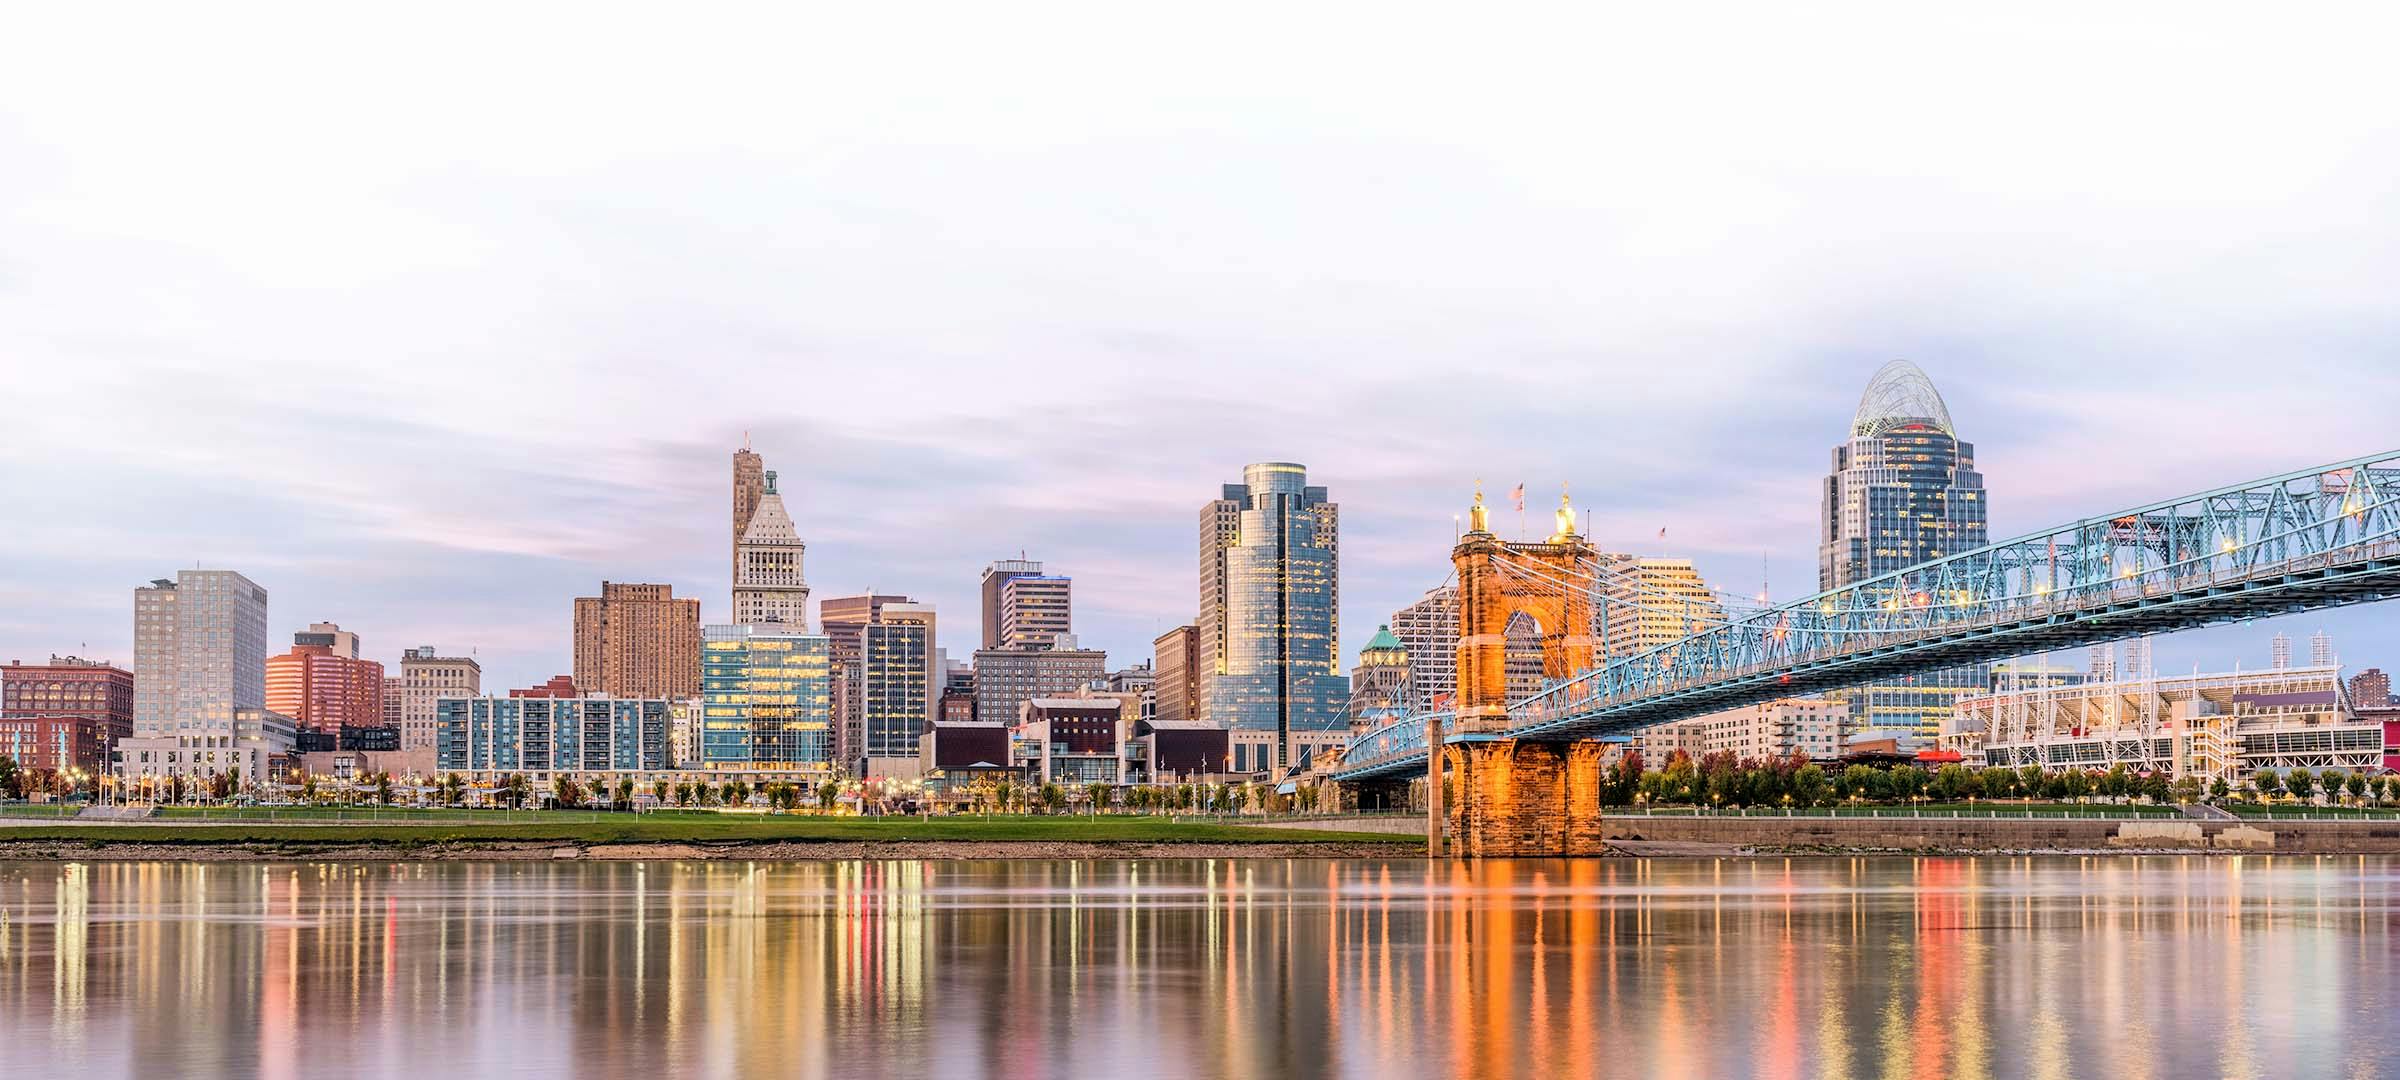 Skyline view of Cincinnati